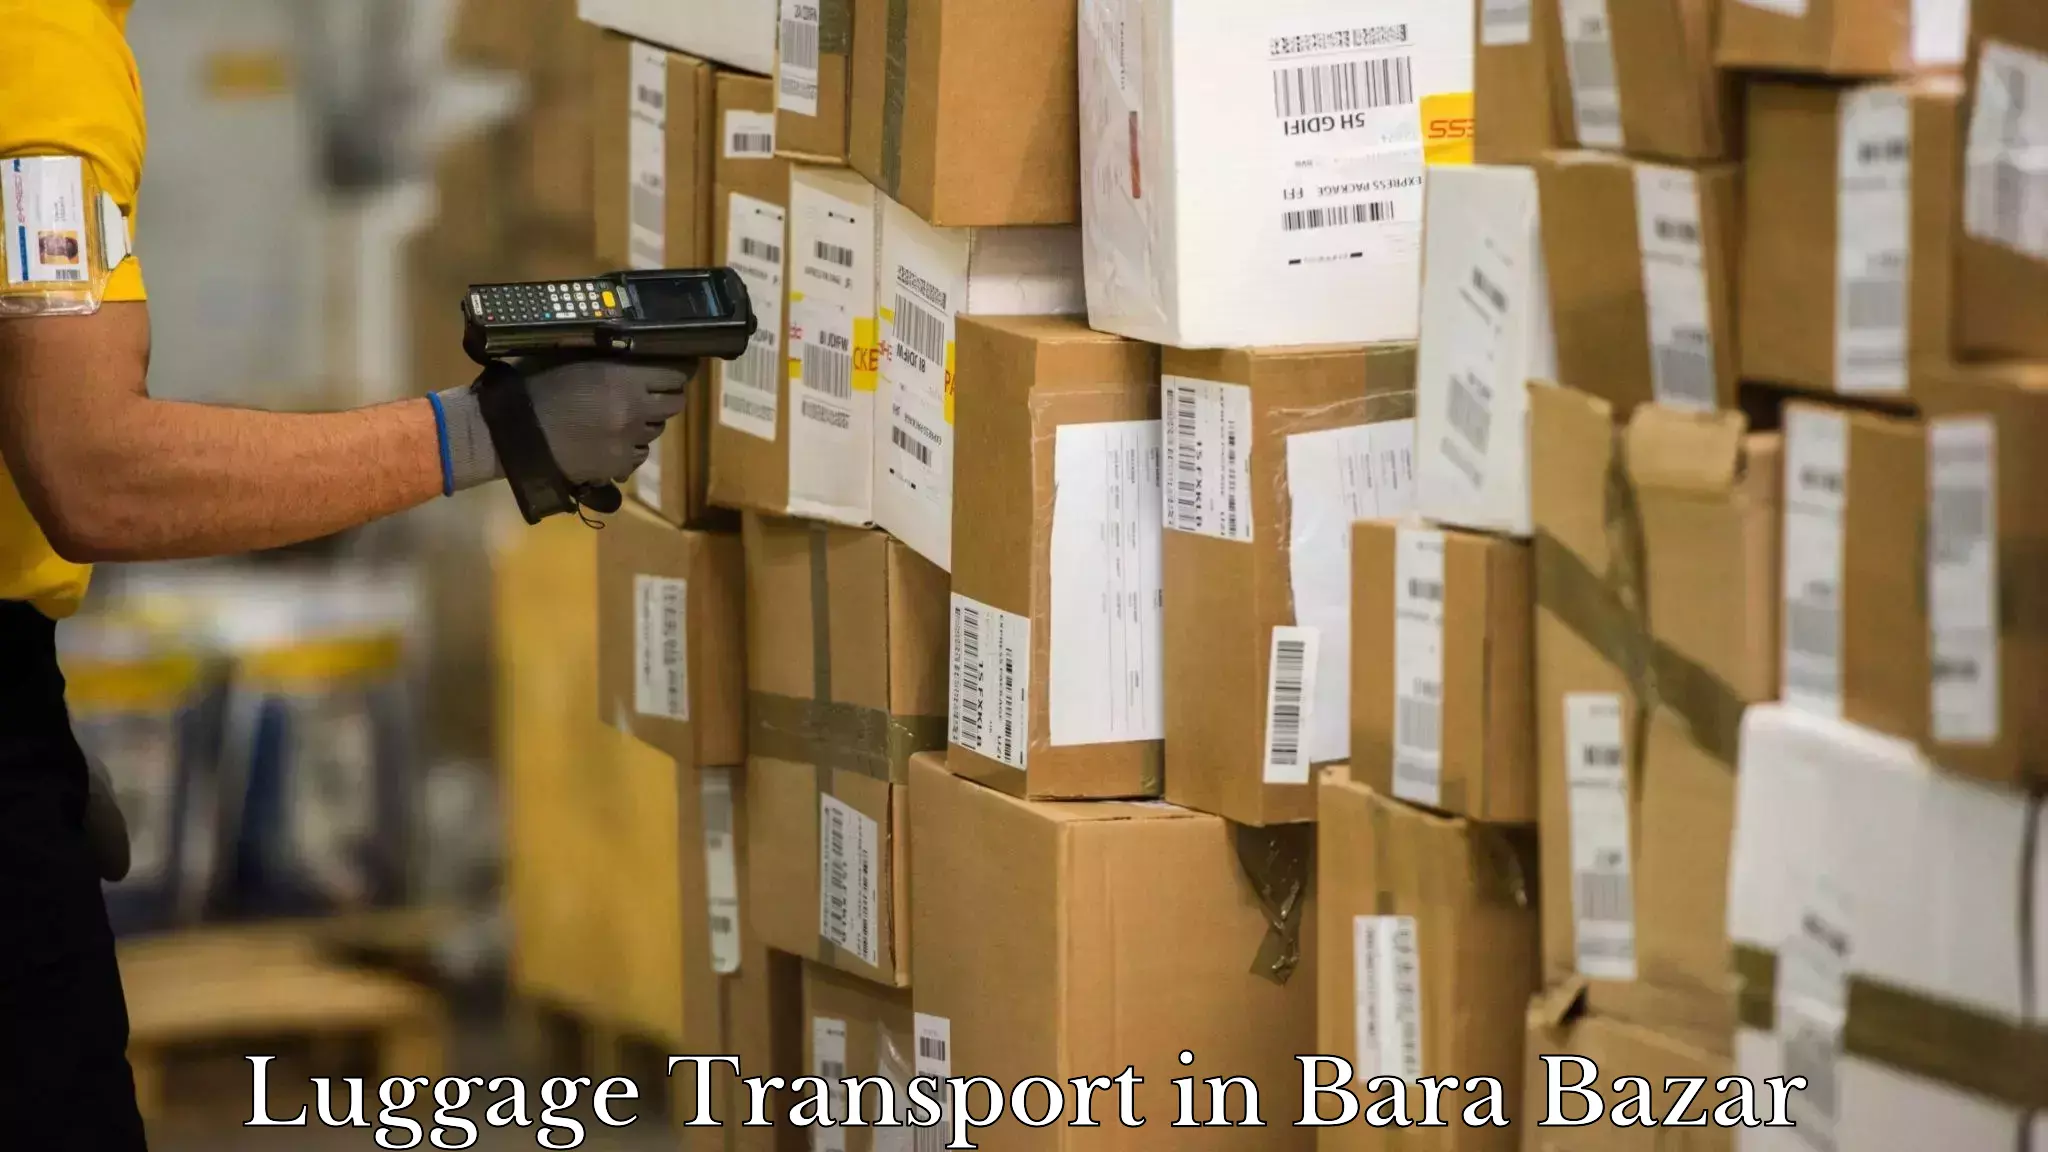 Efficient baggage transport in Bara Bazar